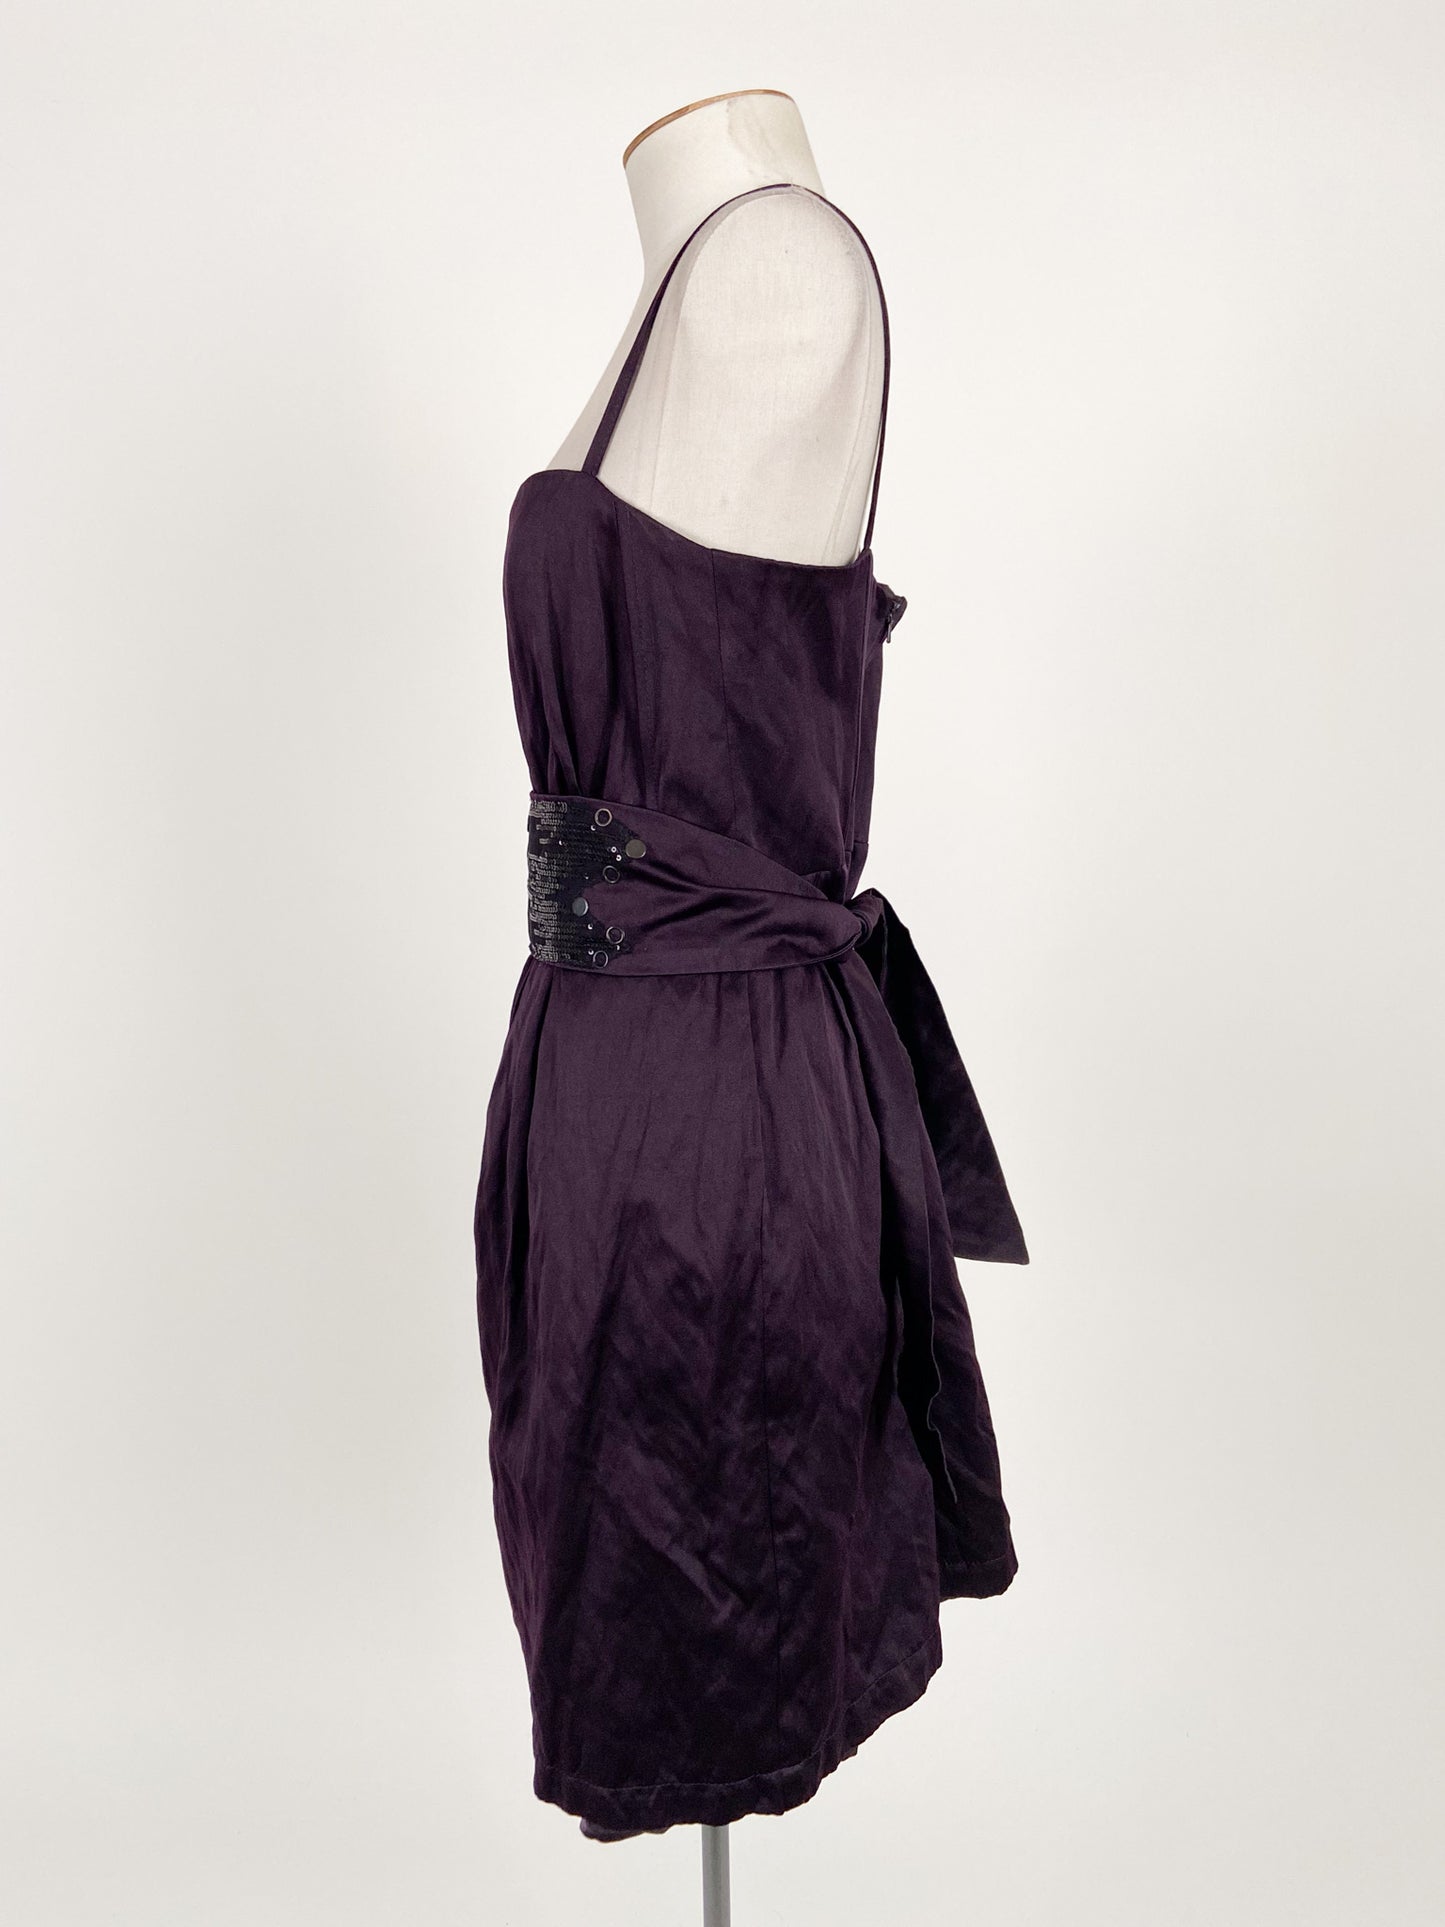 Jacinta Fitzgerald | Purple Cocktail/Formal Dress | Size 12